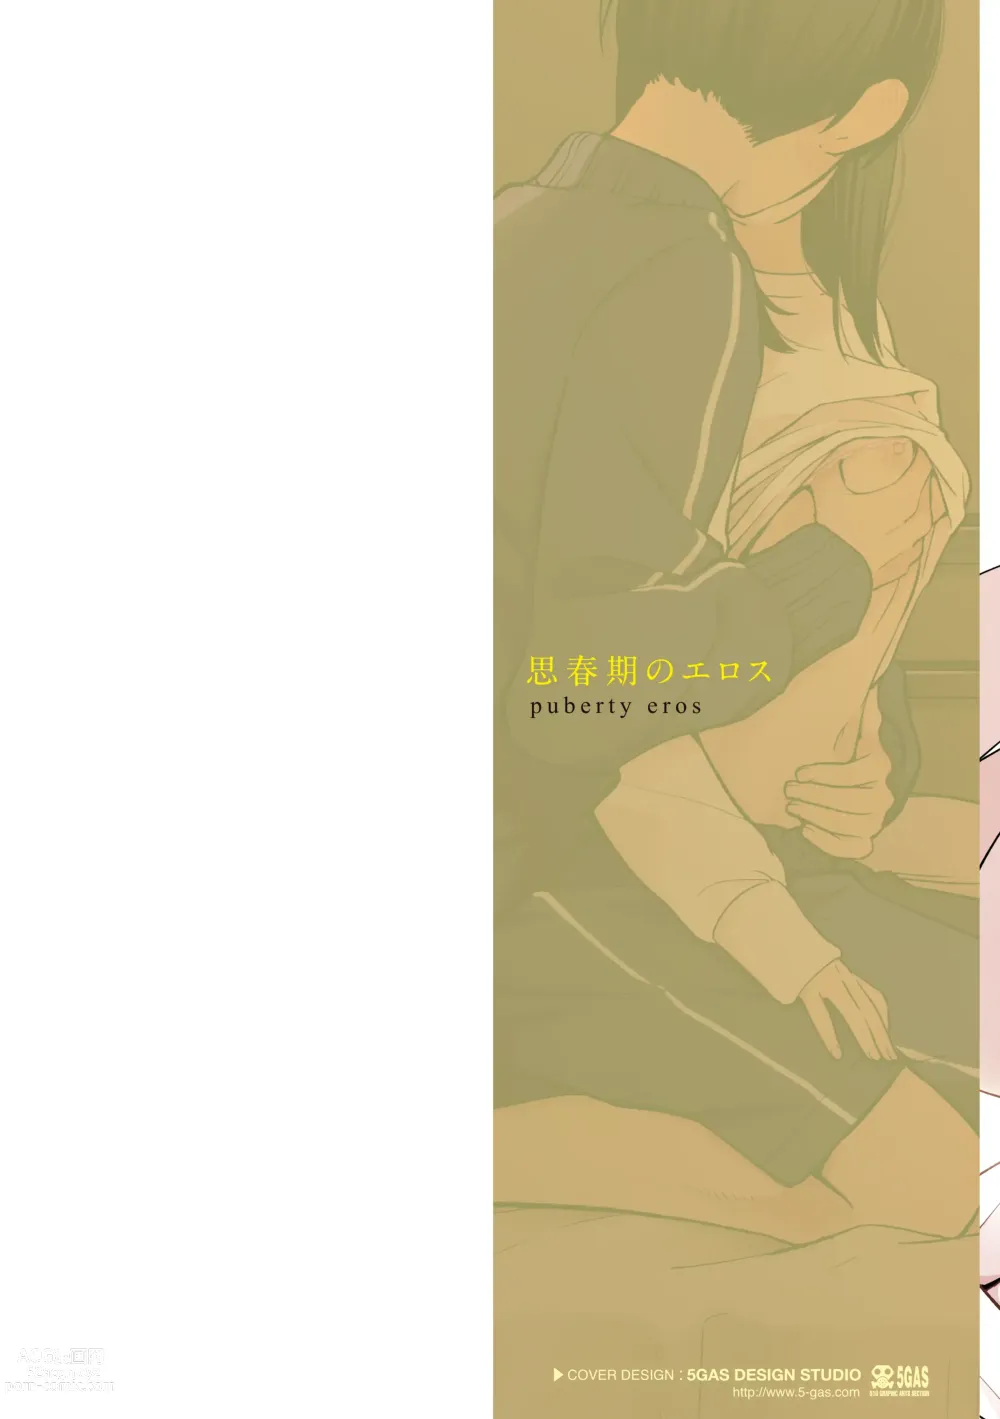 Page 2 of manga Shishunki no Eros - puberty eros + DLsite Kounyu Tokuten